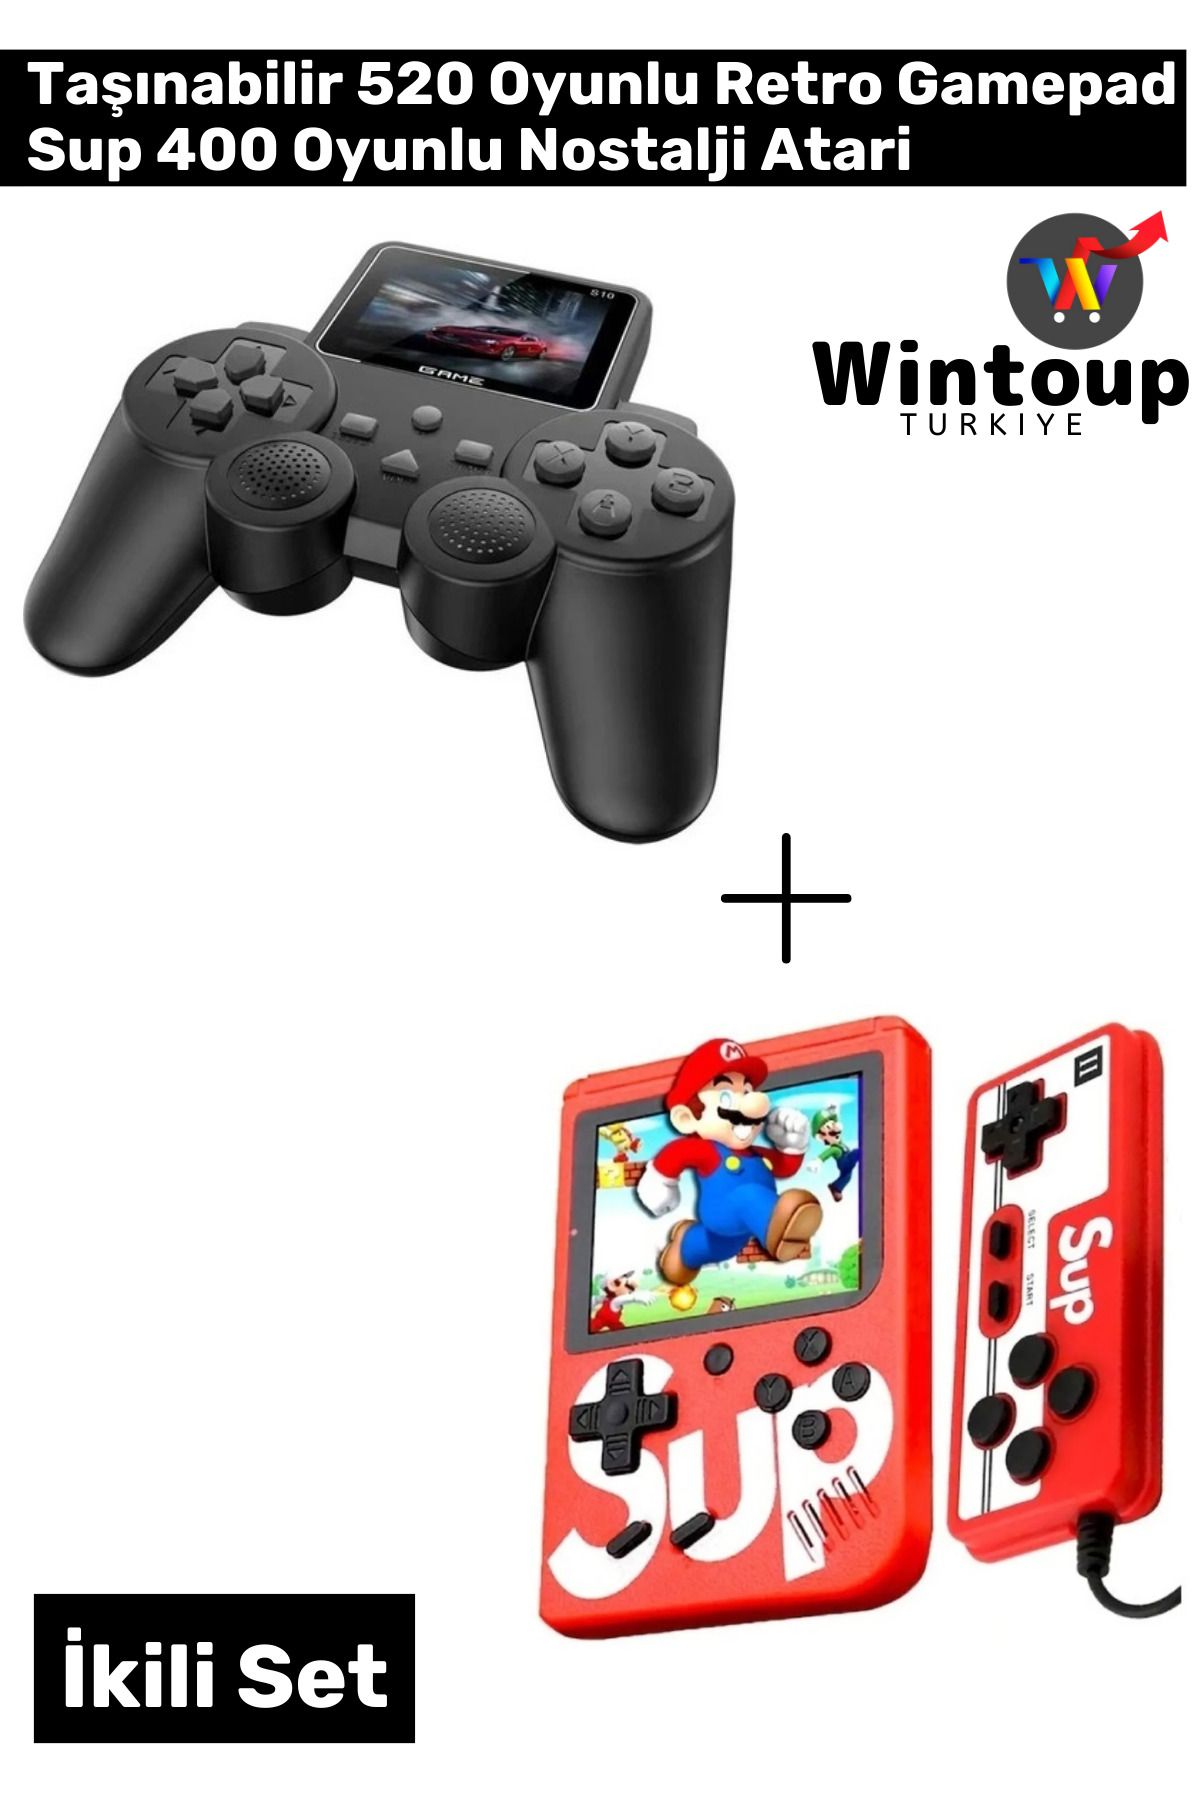 Wintoup Mini El Atarisi 400 Oyunlu+S10 Gamepad Taşınabilir İkili Set